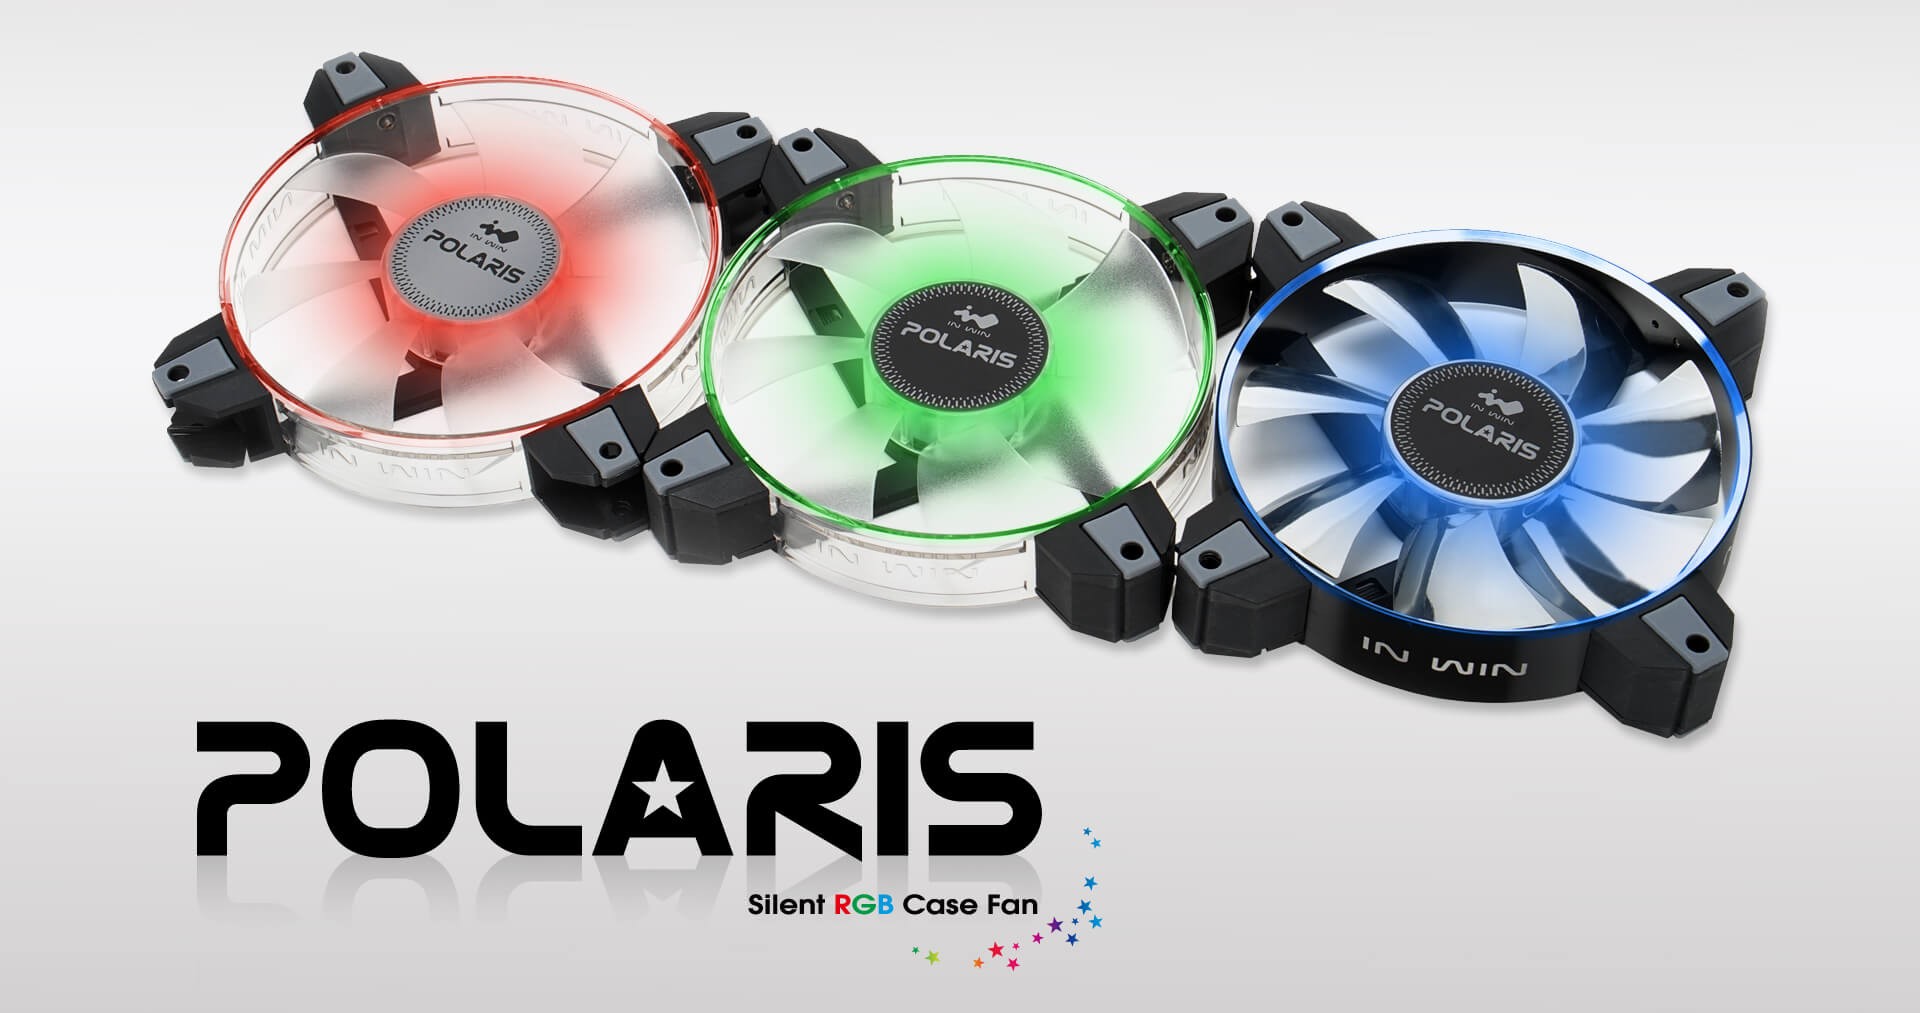 Polaris / In Win Development Inc.